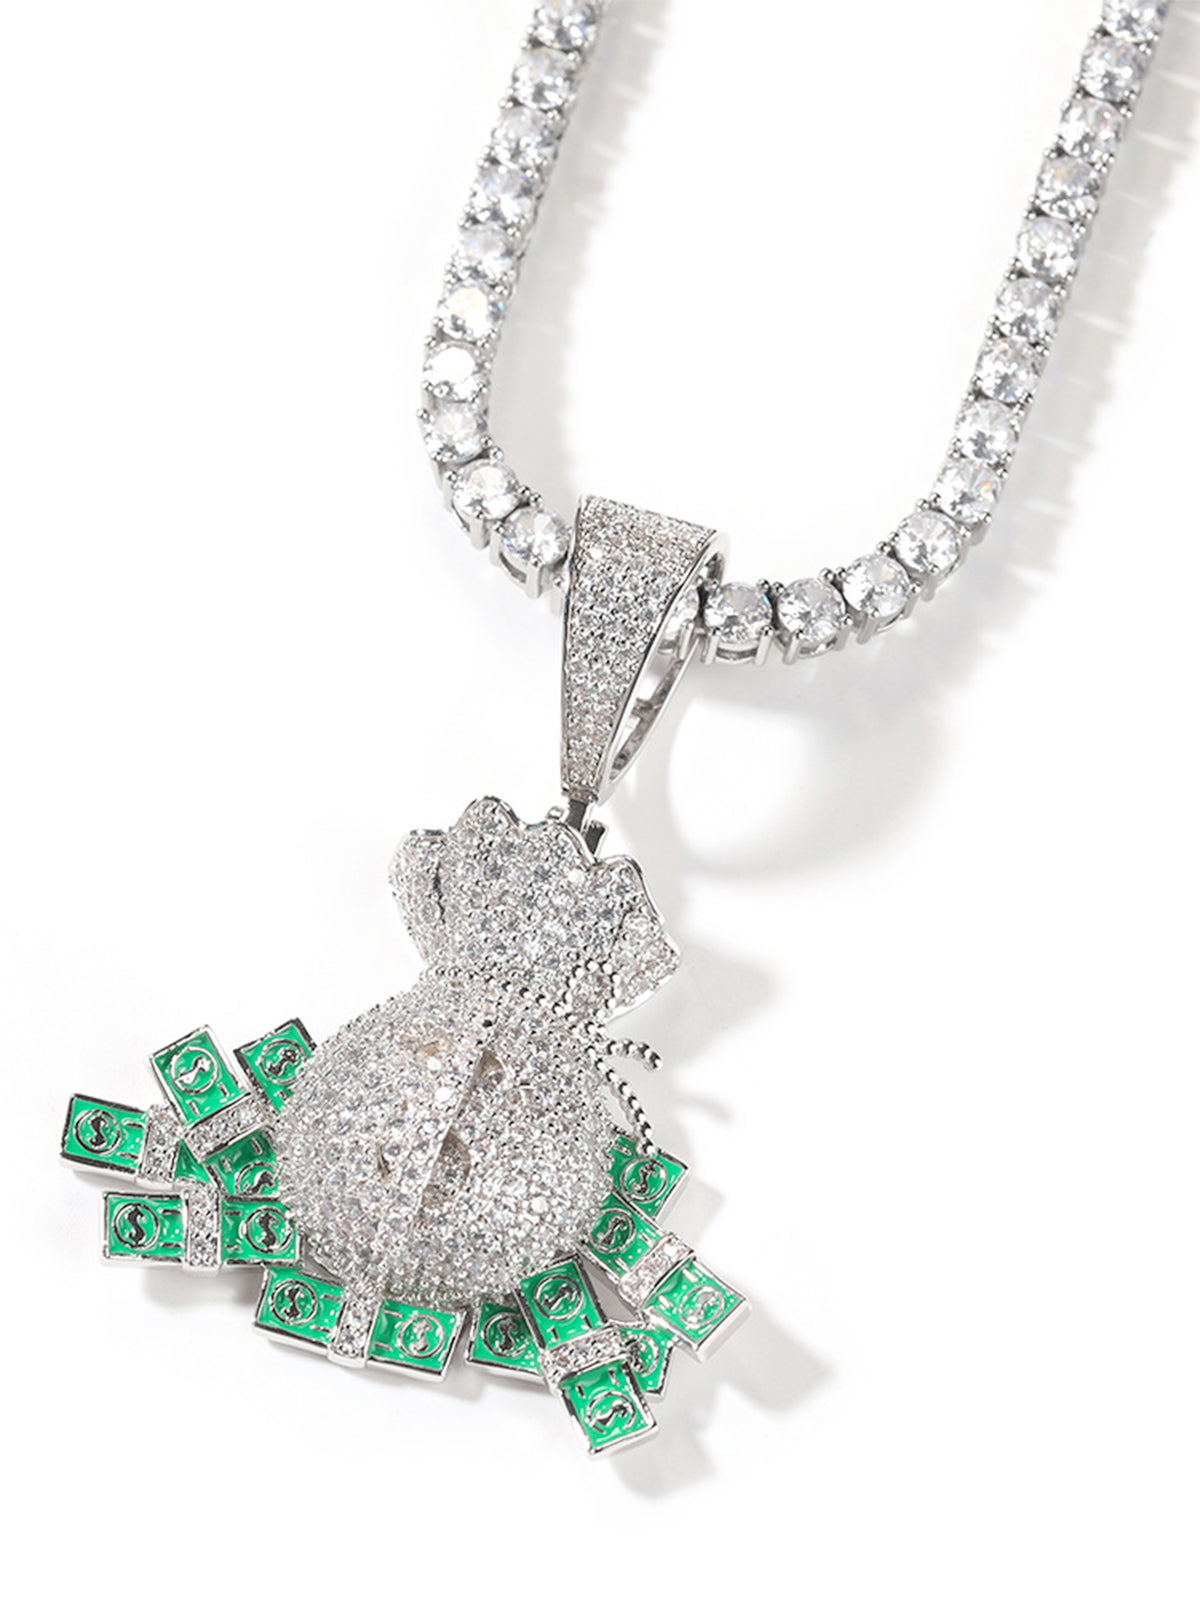 Diamond-studded dollar bag Necklace